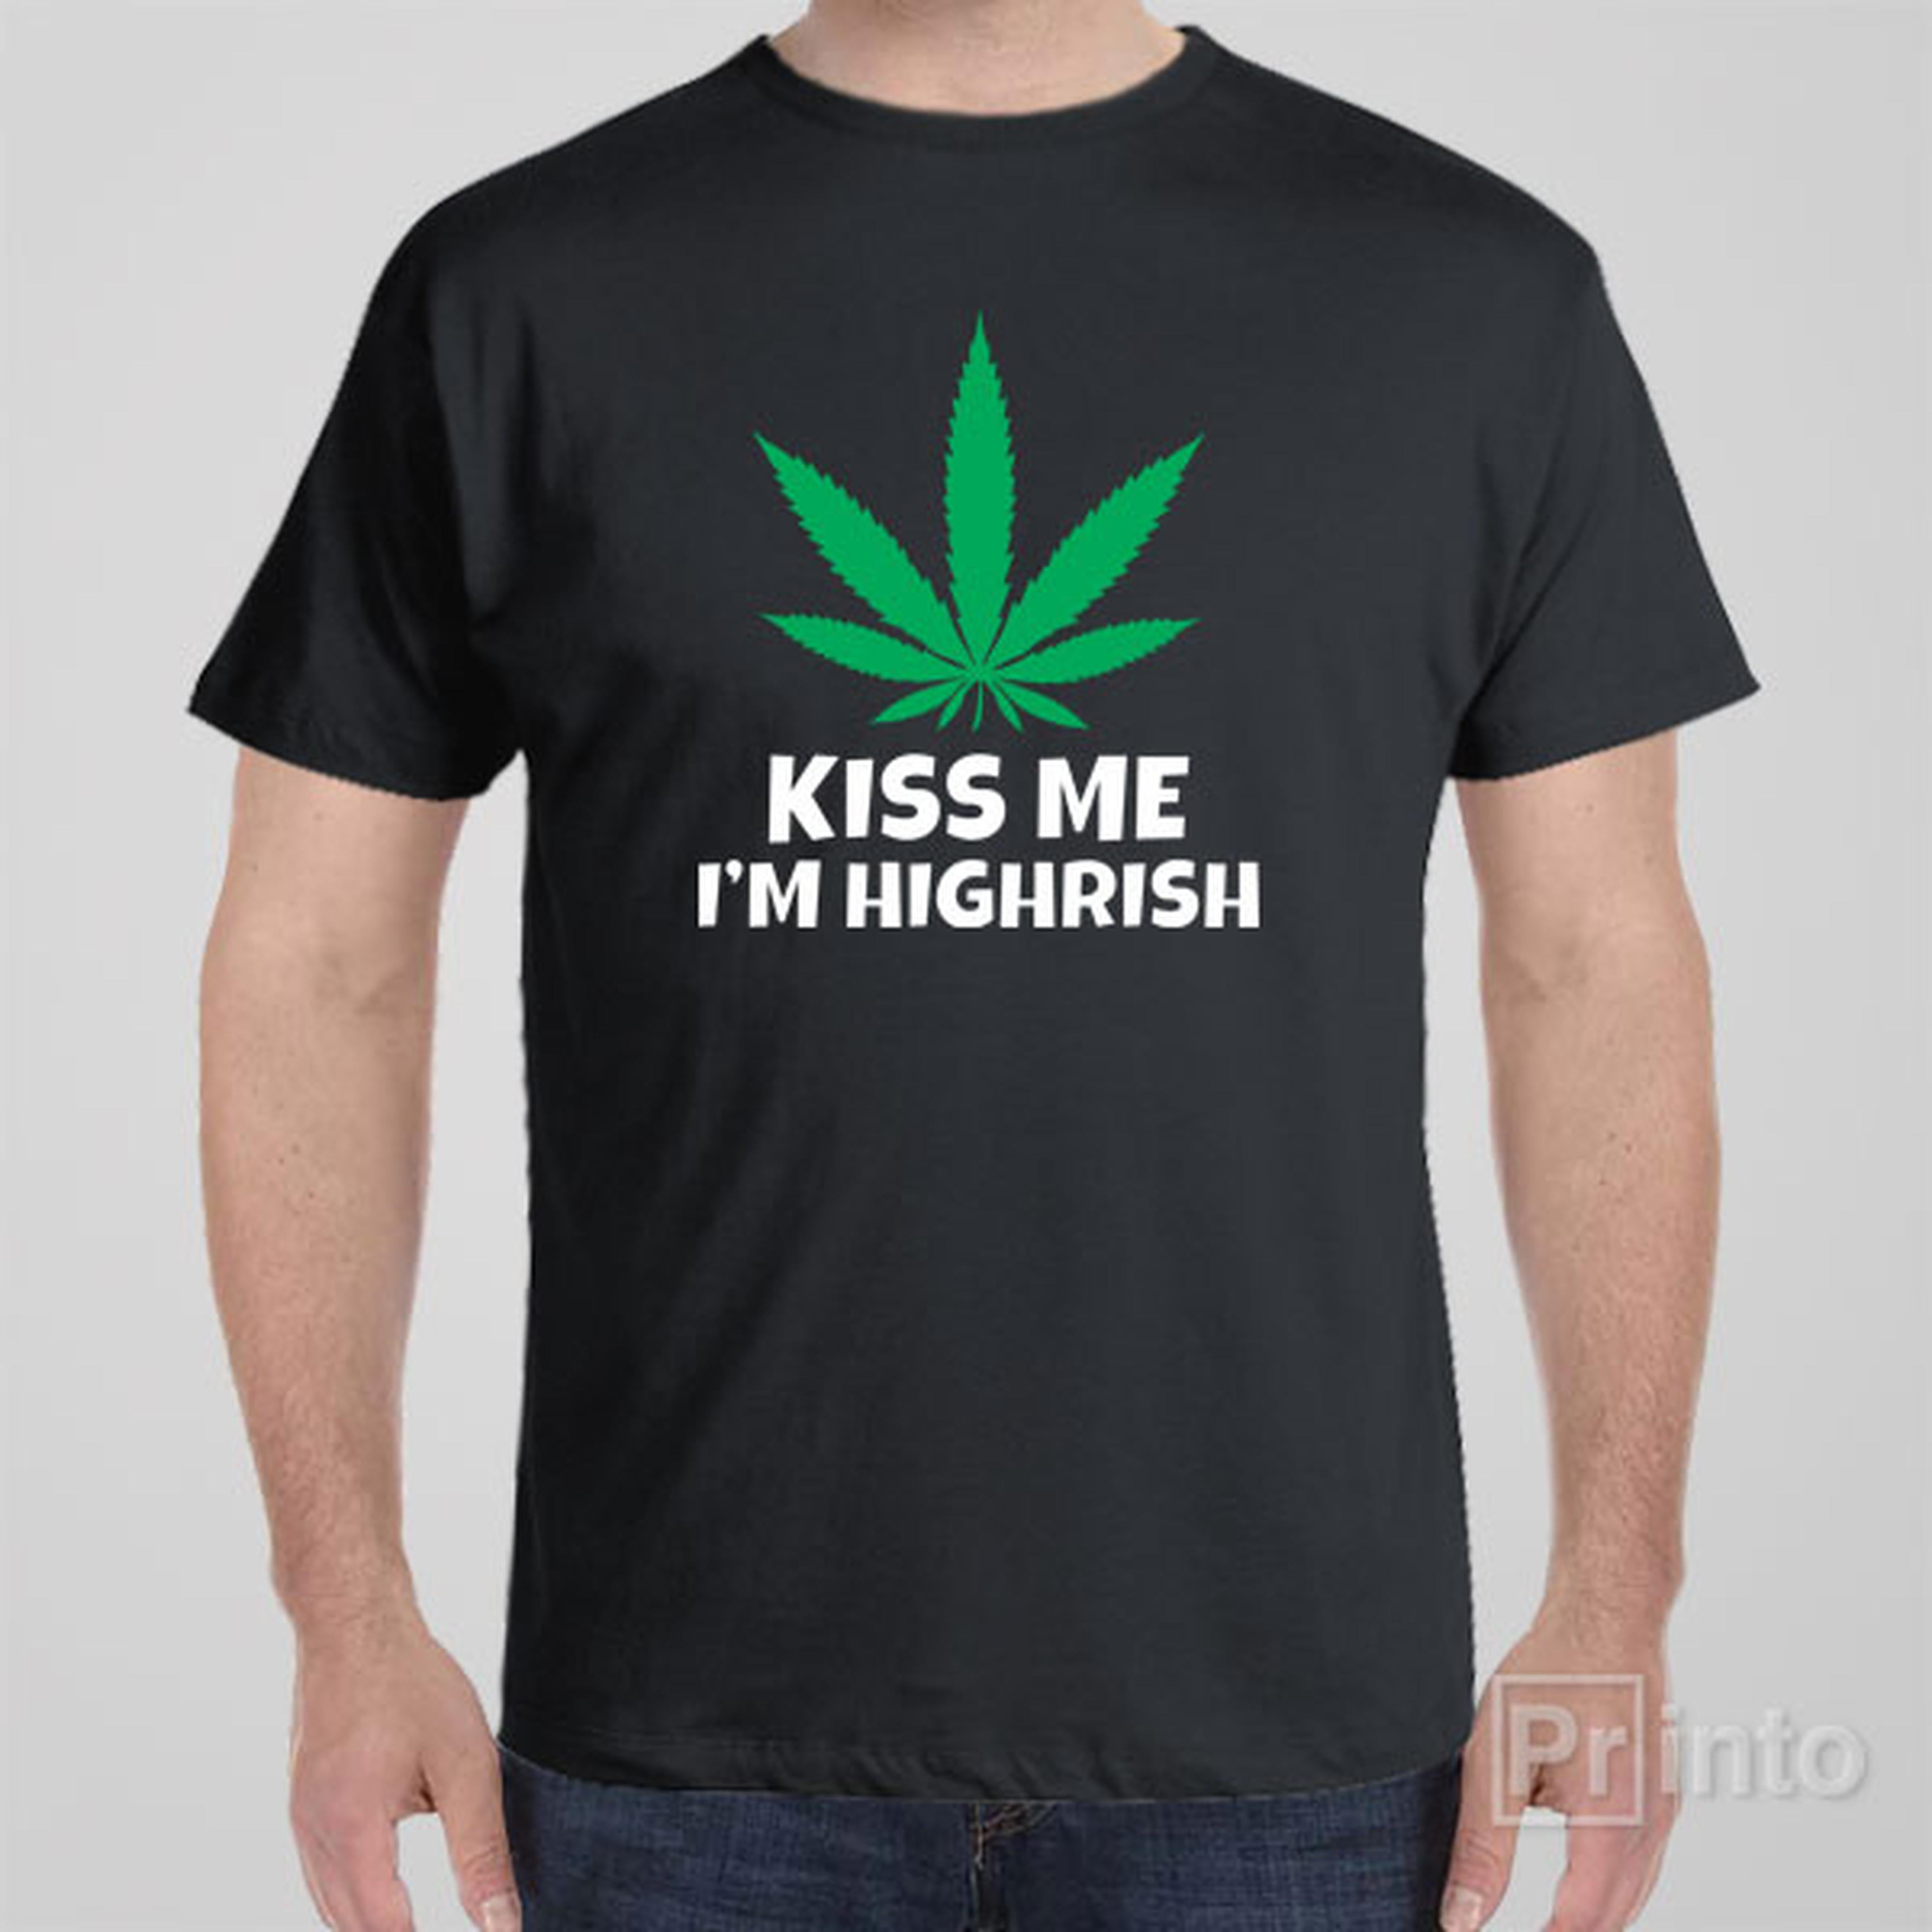 kiss-me-im-highrish-t-shirt